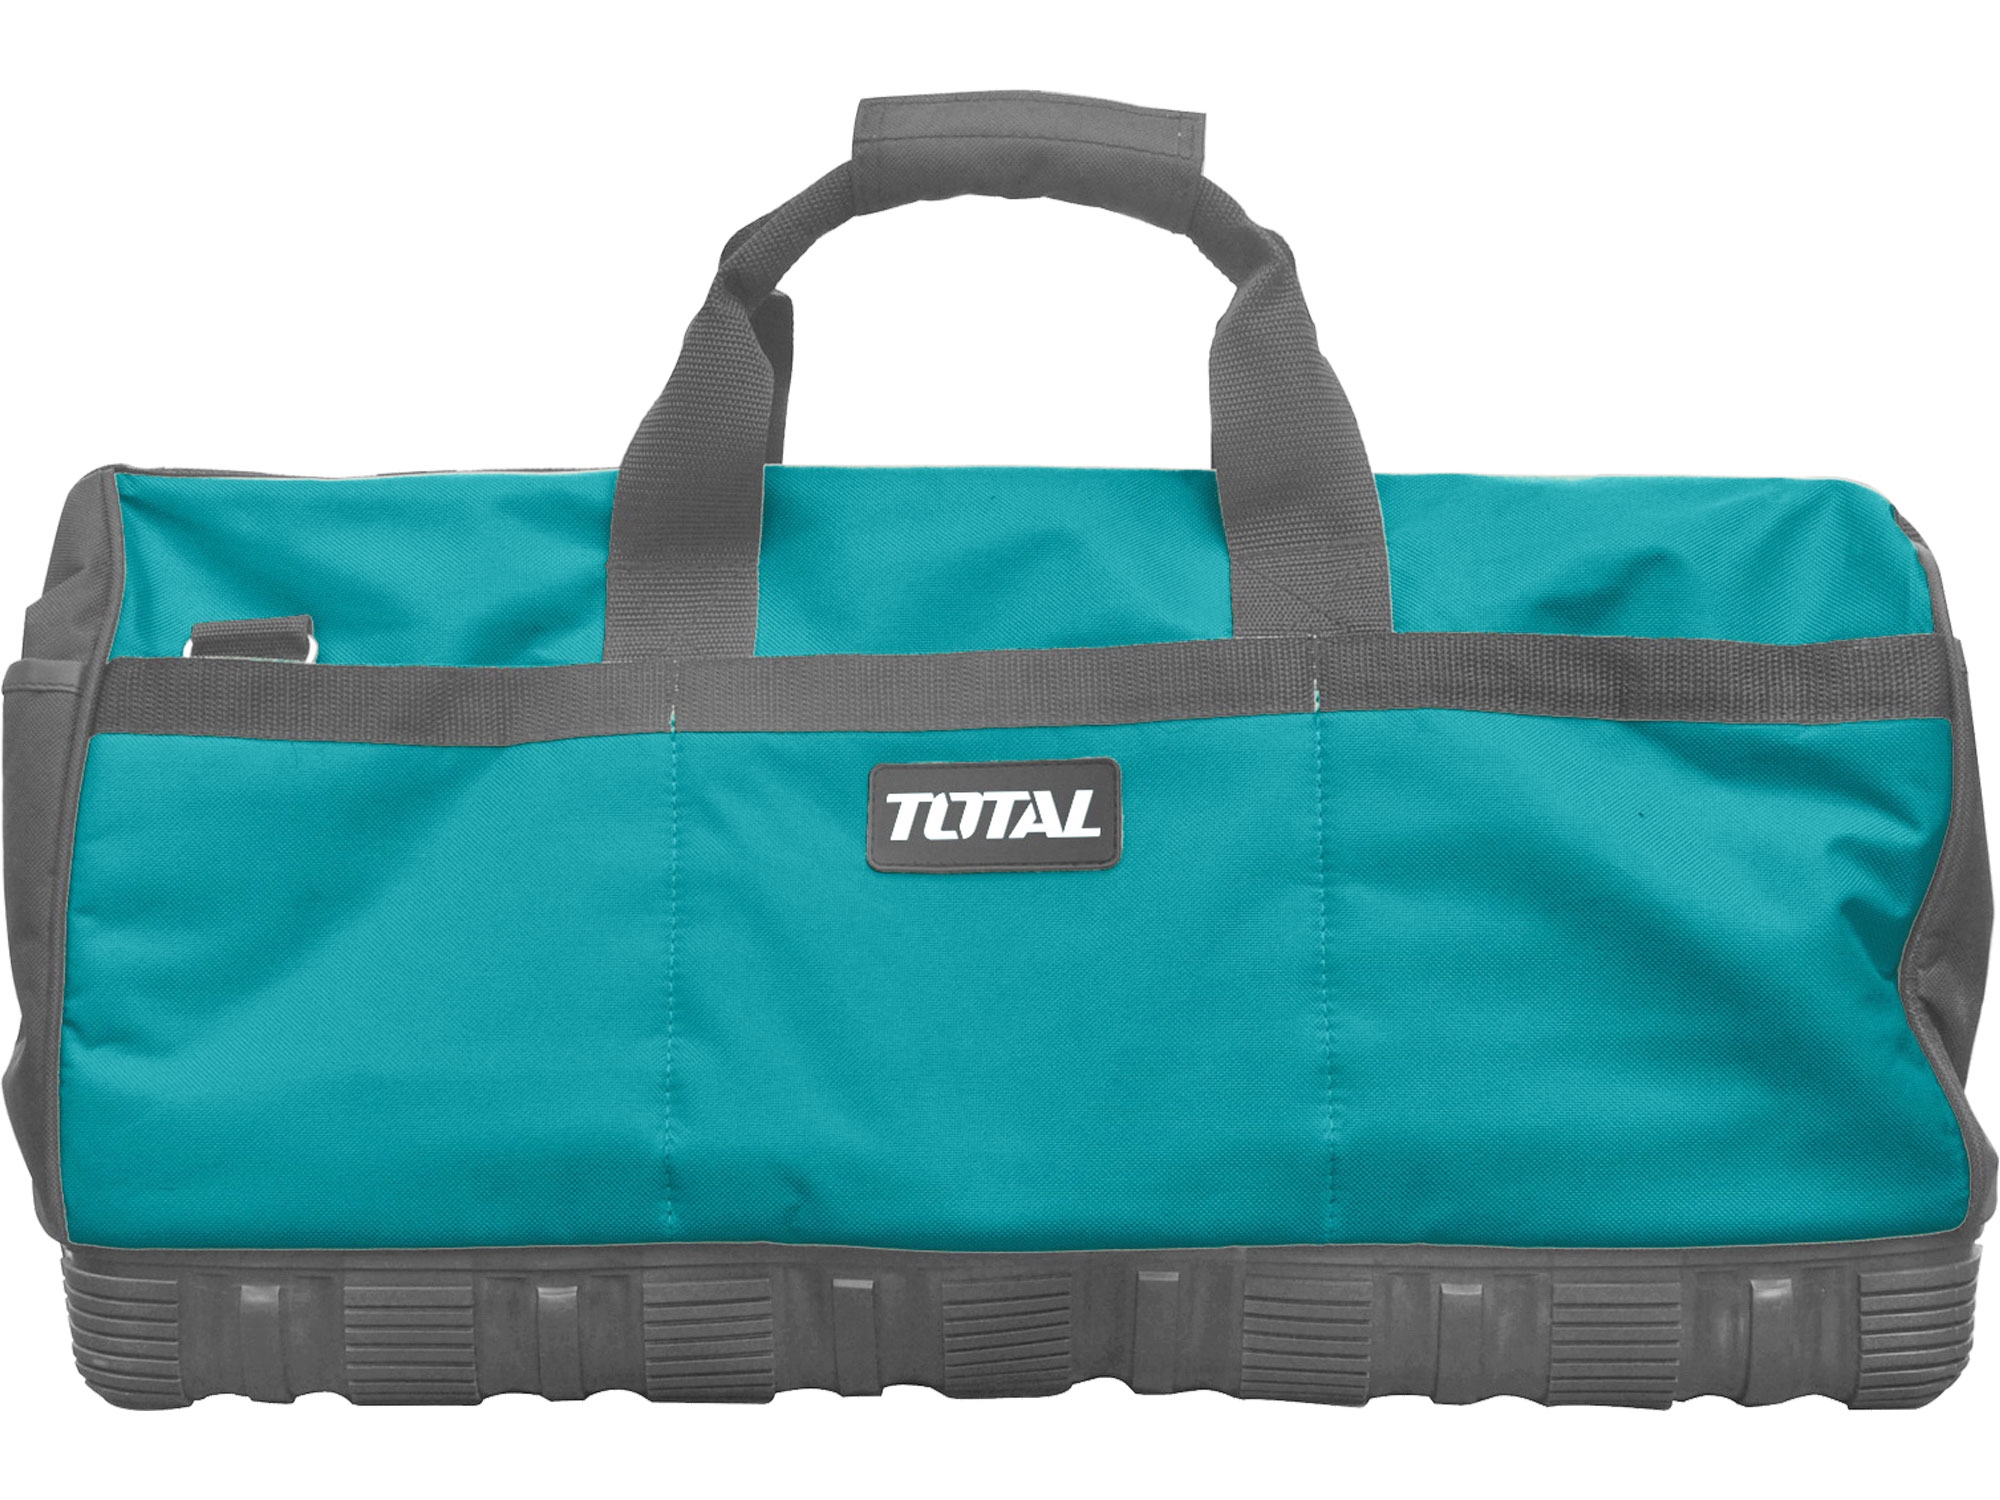 TOTAL THT16241 taška na nářadí, industrial, 61 cm, plastové dno